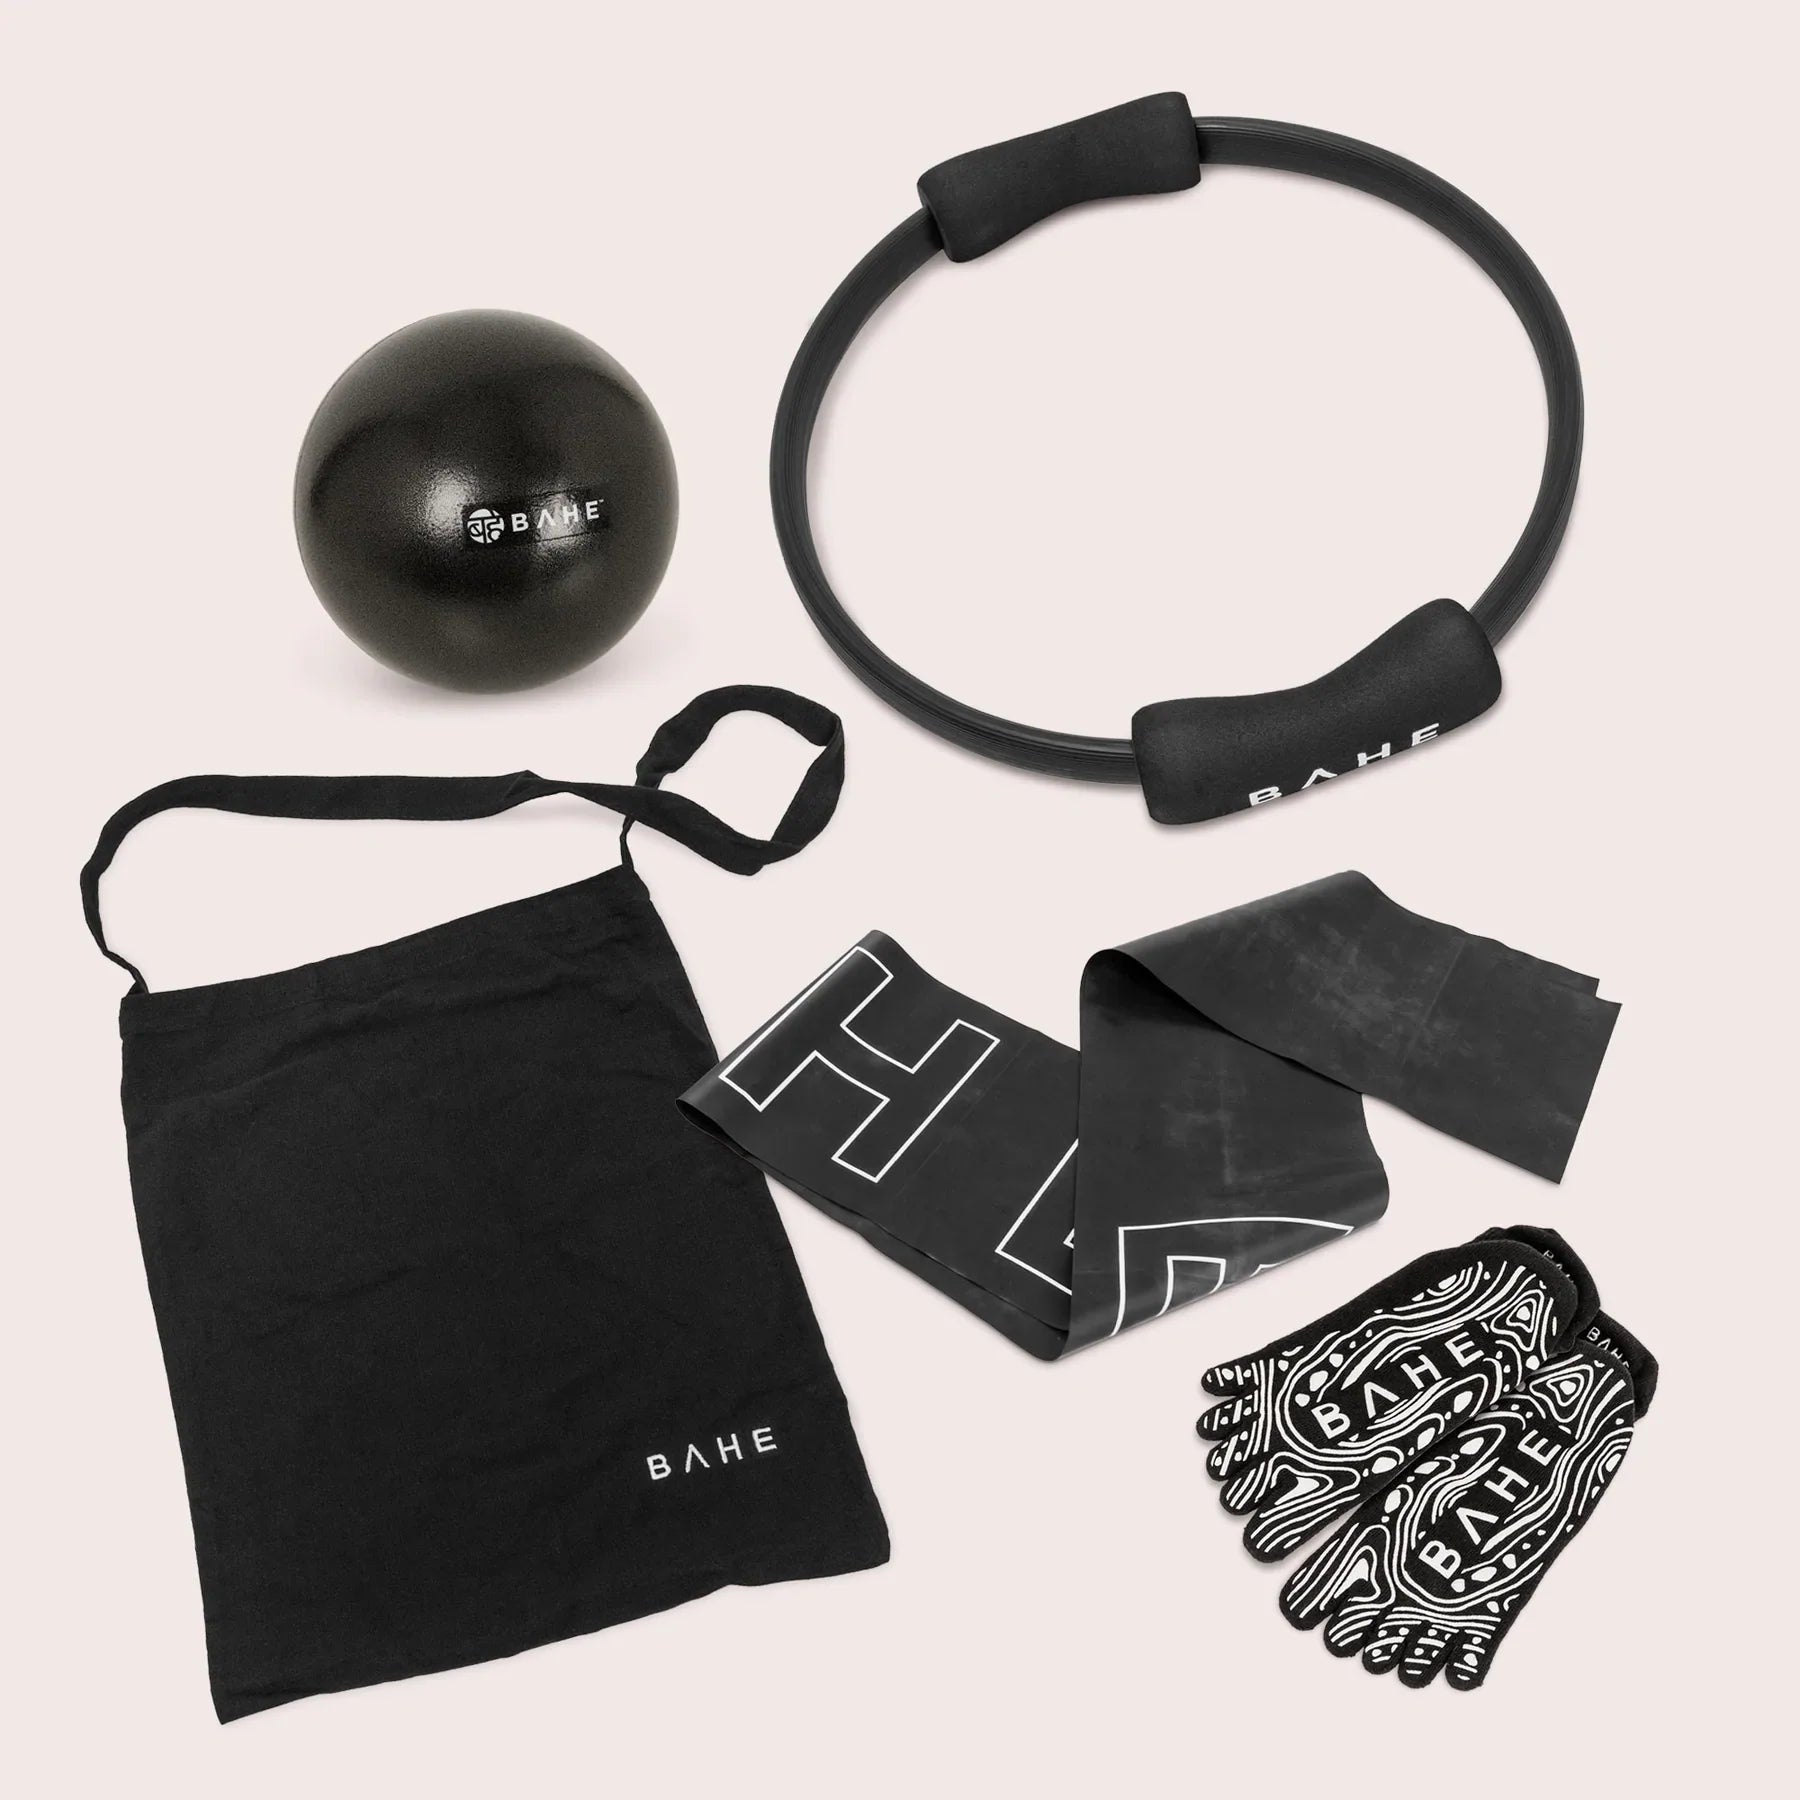 BAHE Pilates Essentials (Ring, Socks, Ball, Tote Bag) - Black